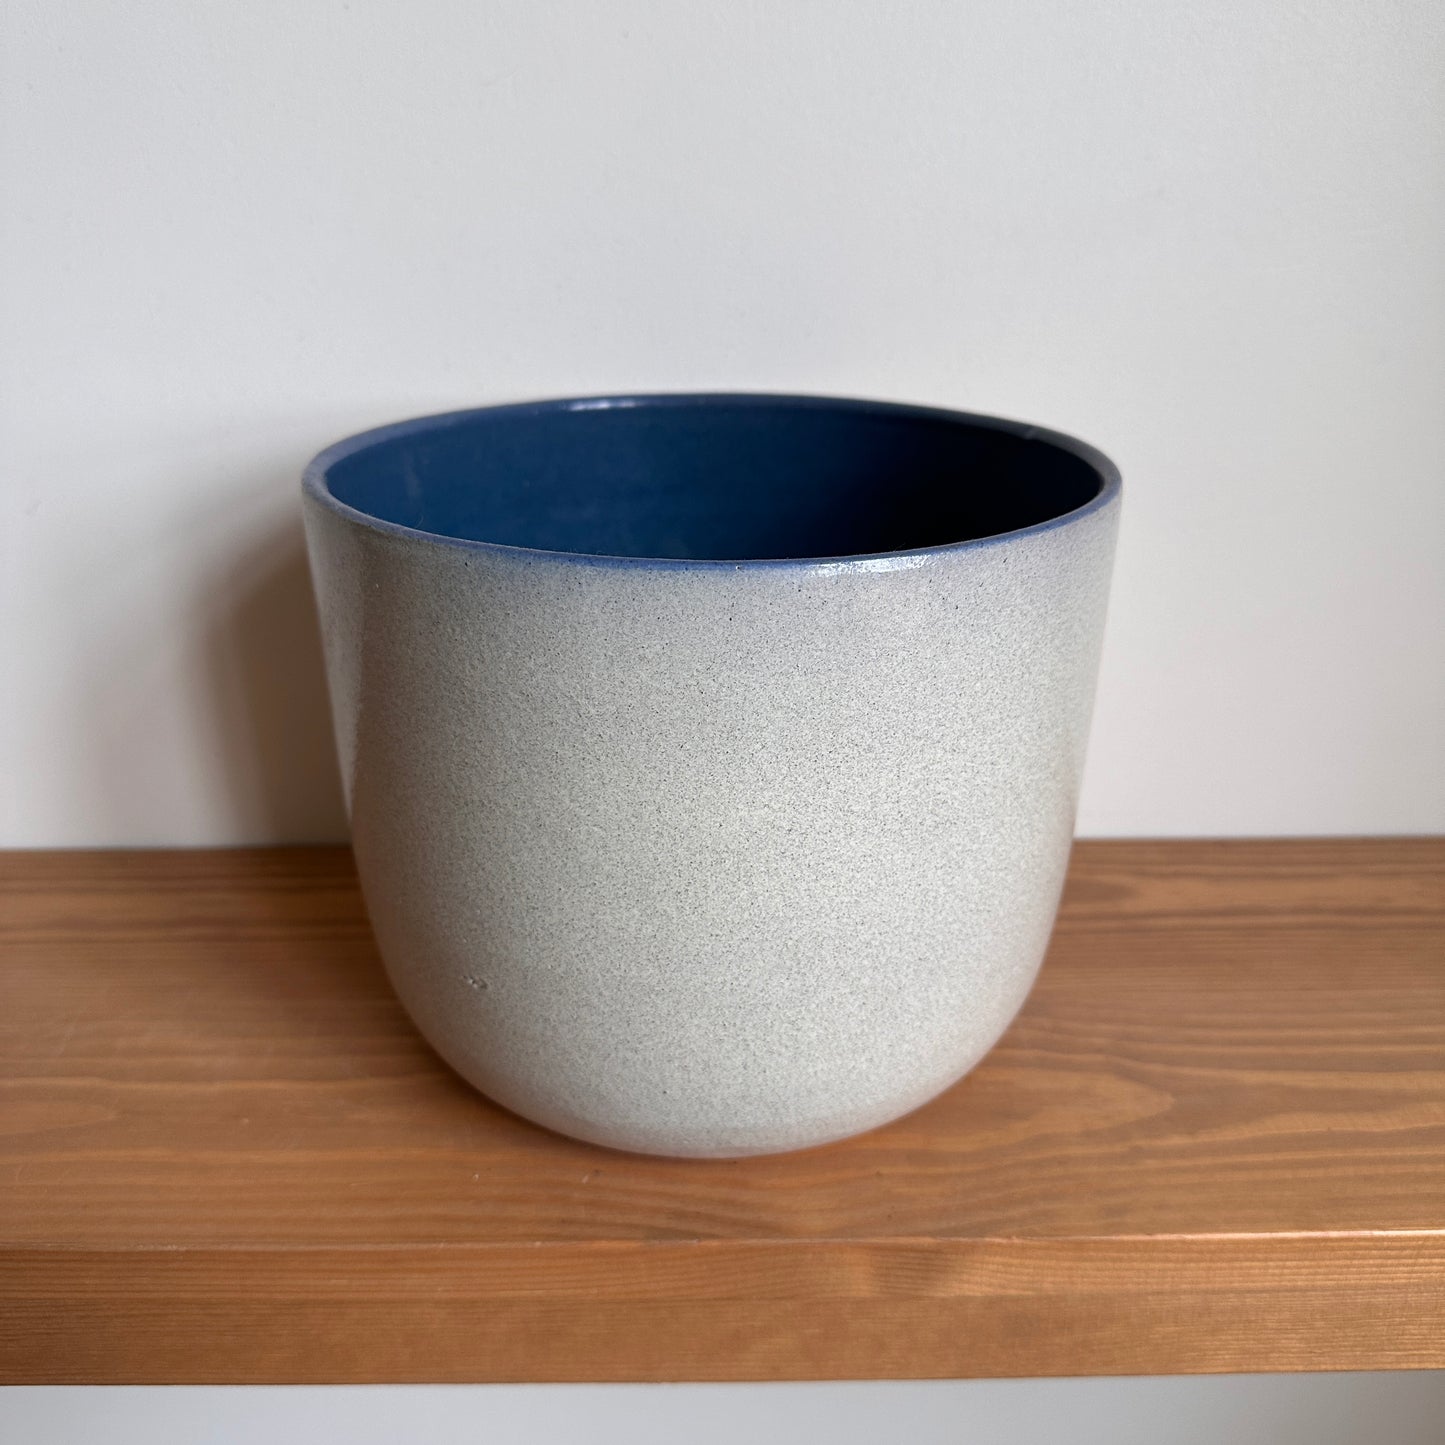 White and blue ceramic pot